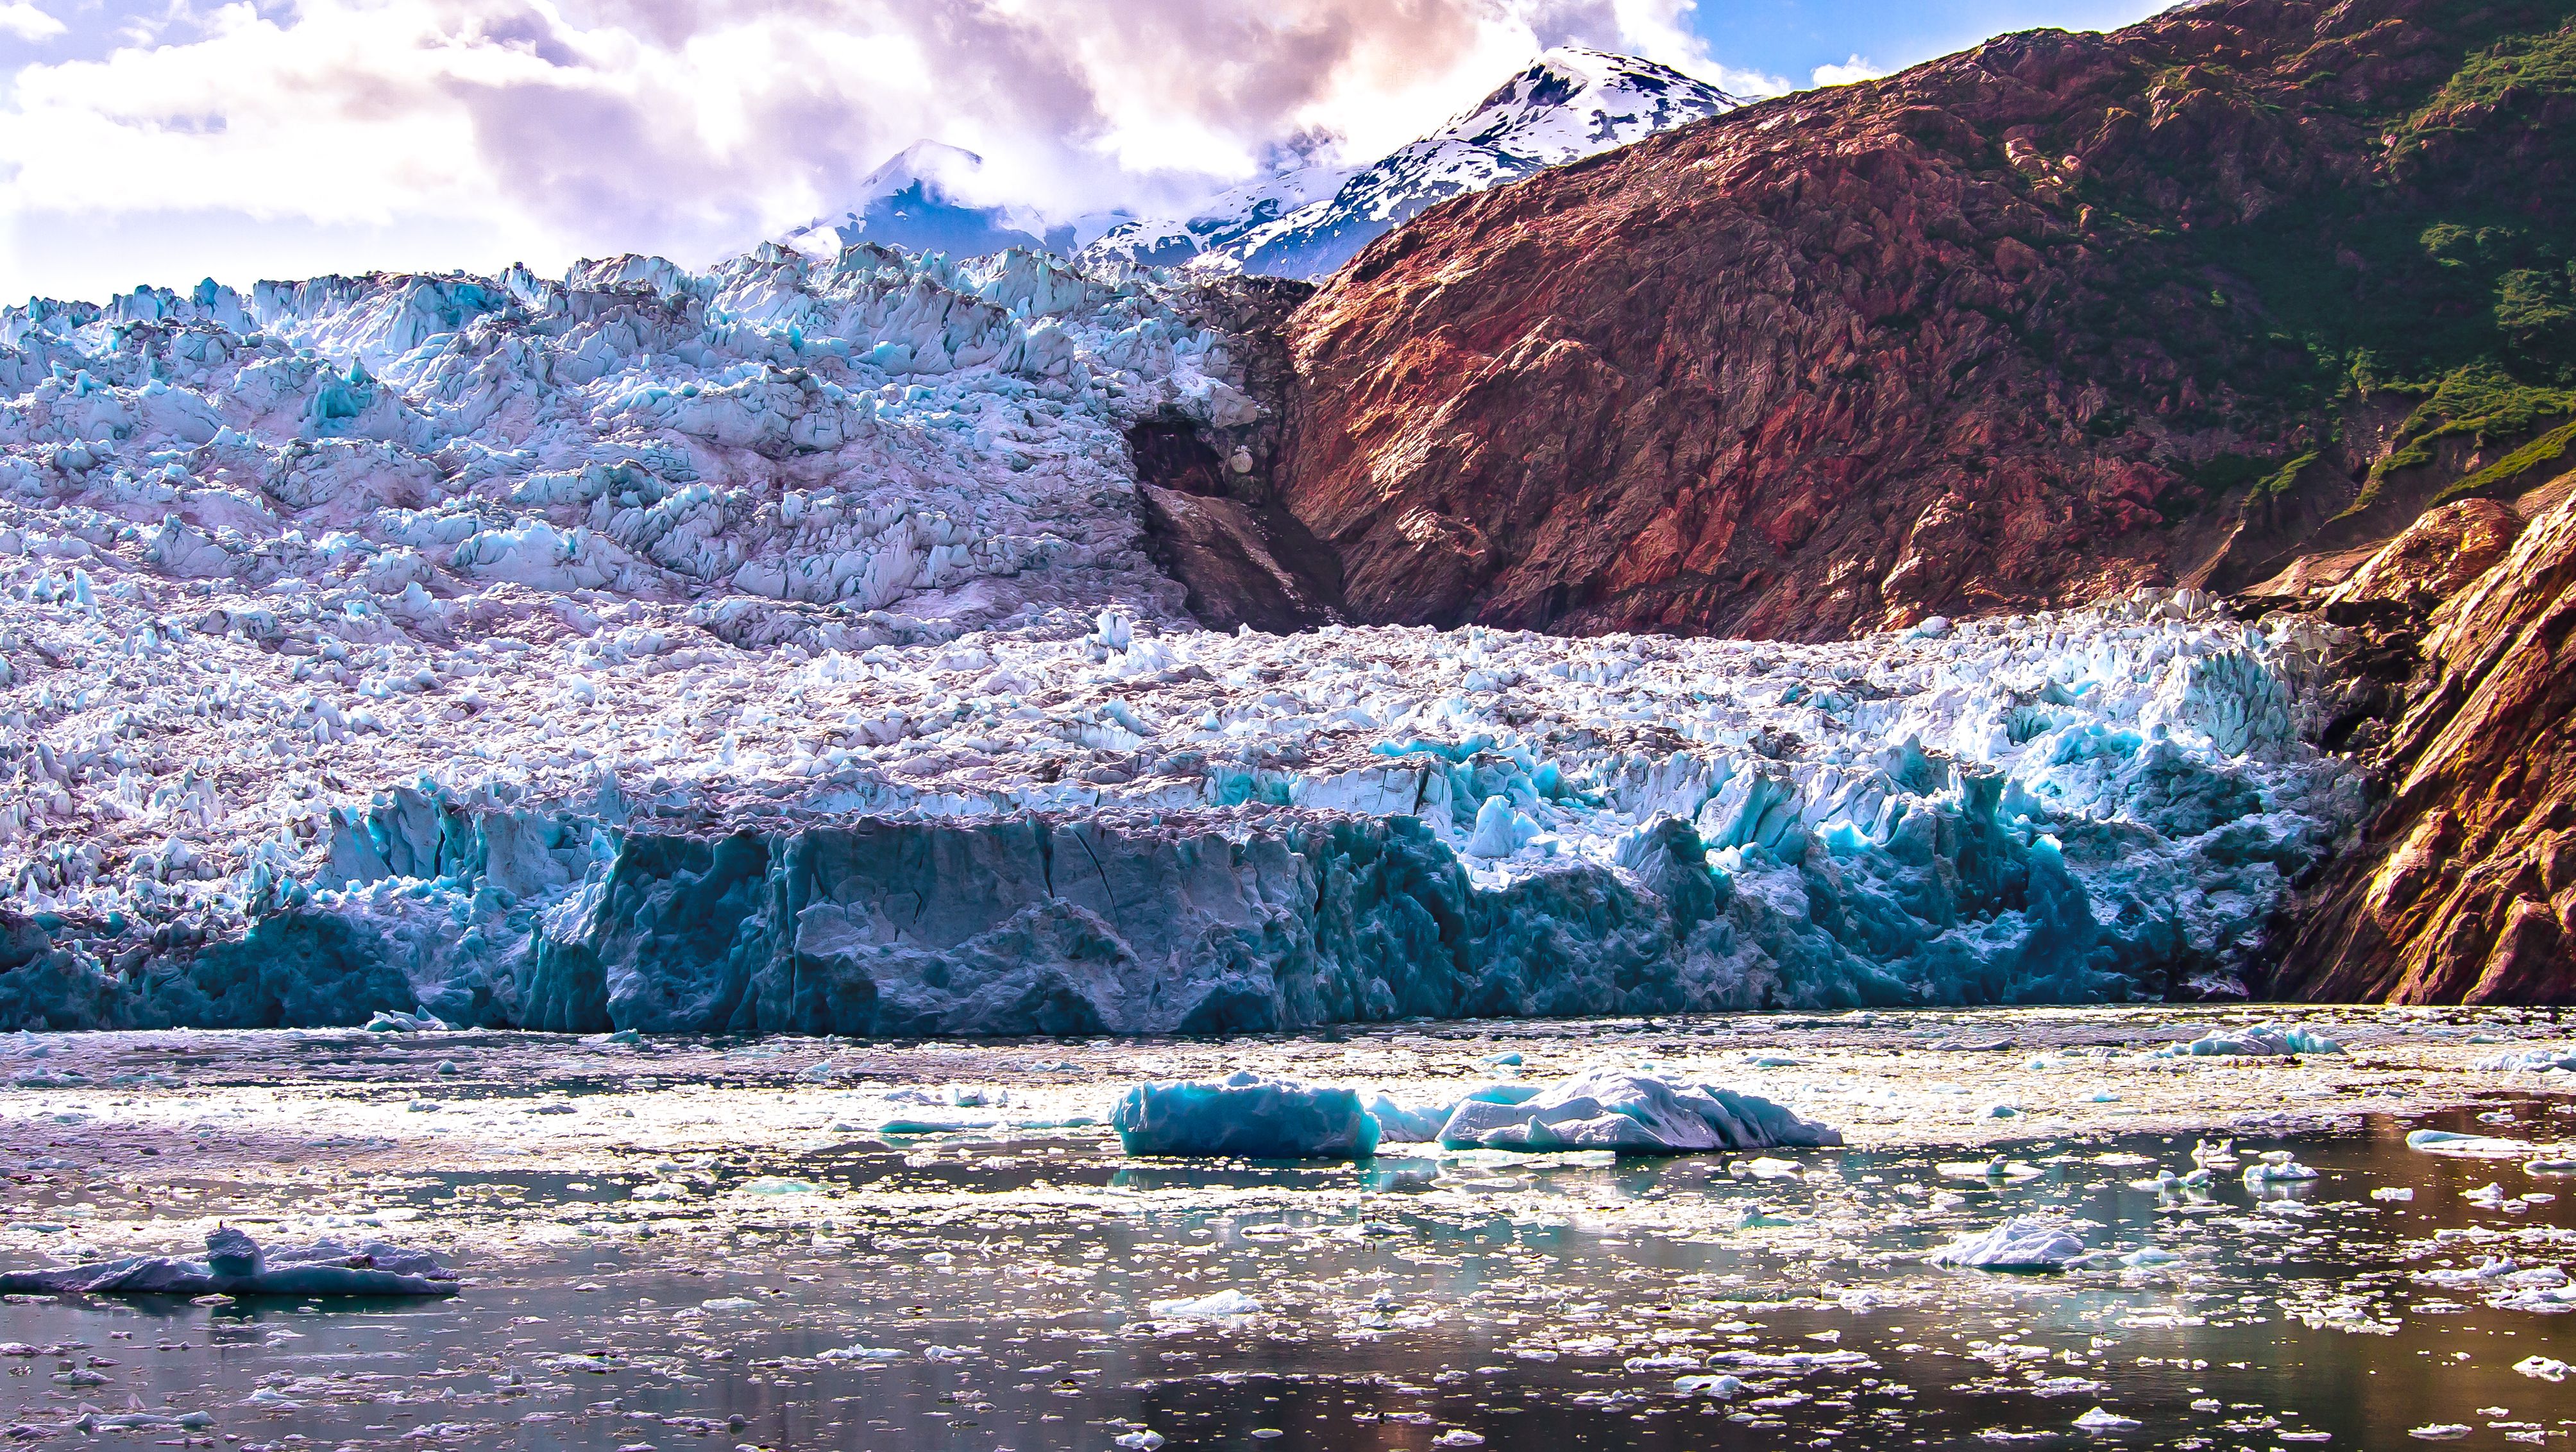 Glacial Retreat: Ian D. Keating via Flickr